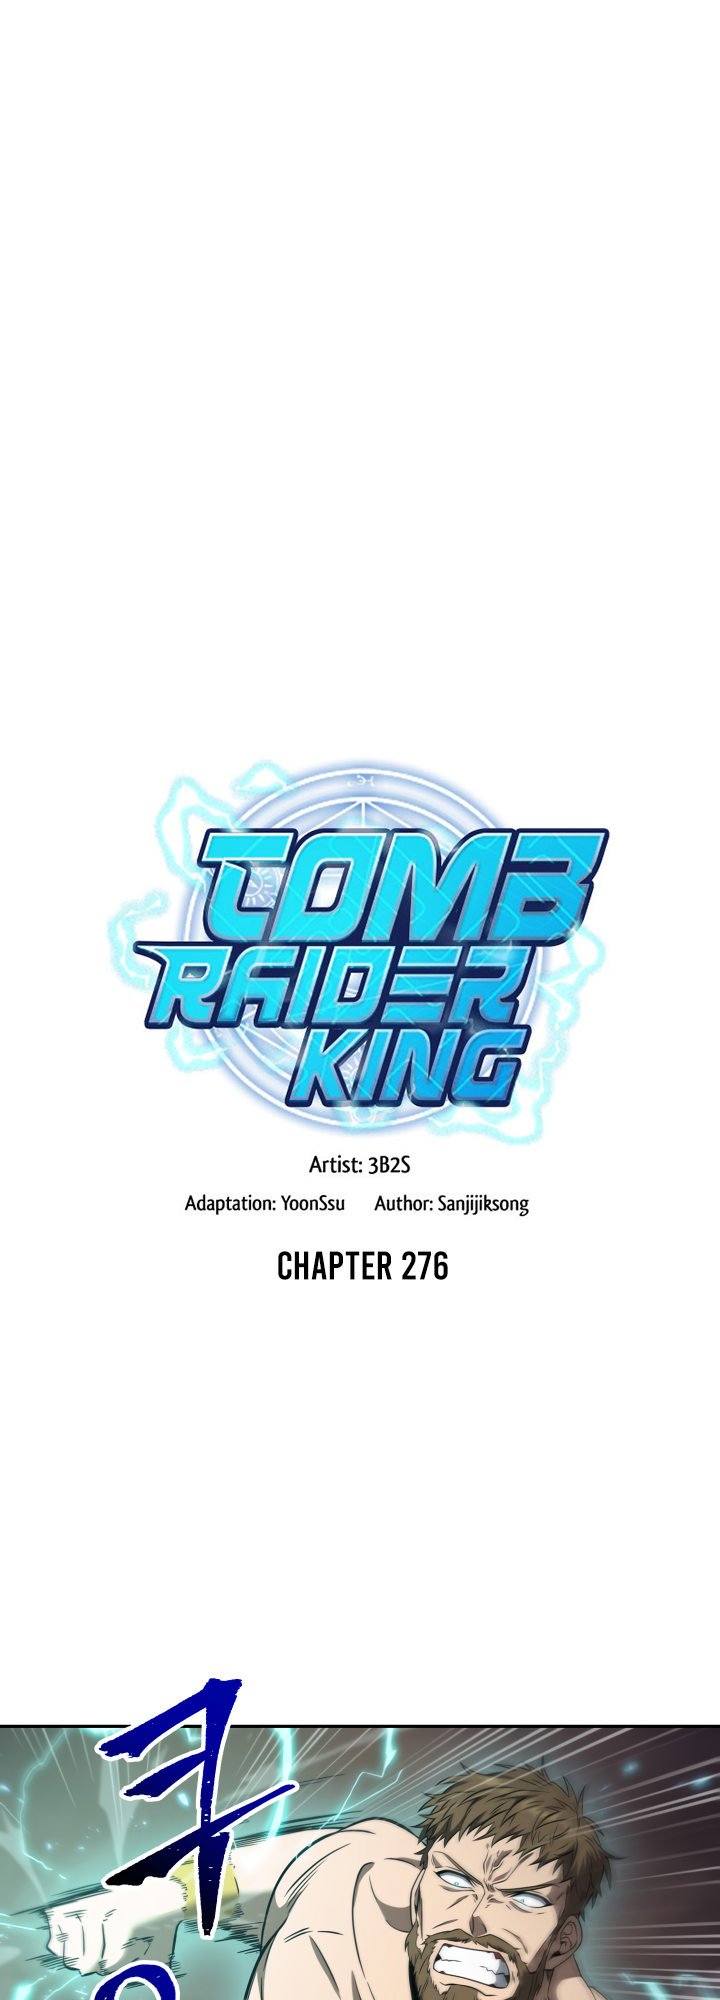 tomb-raider-king-chap-276-1